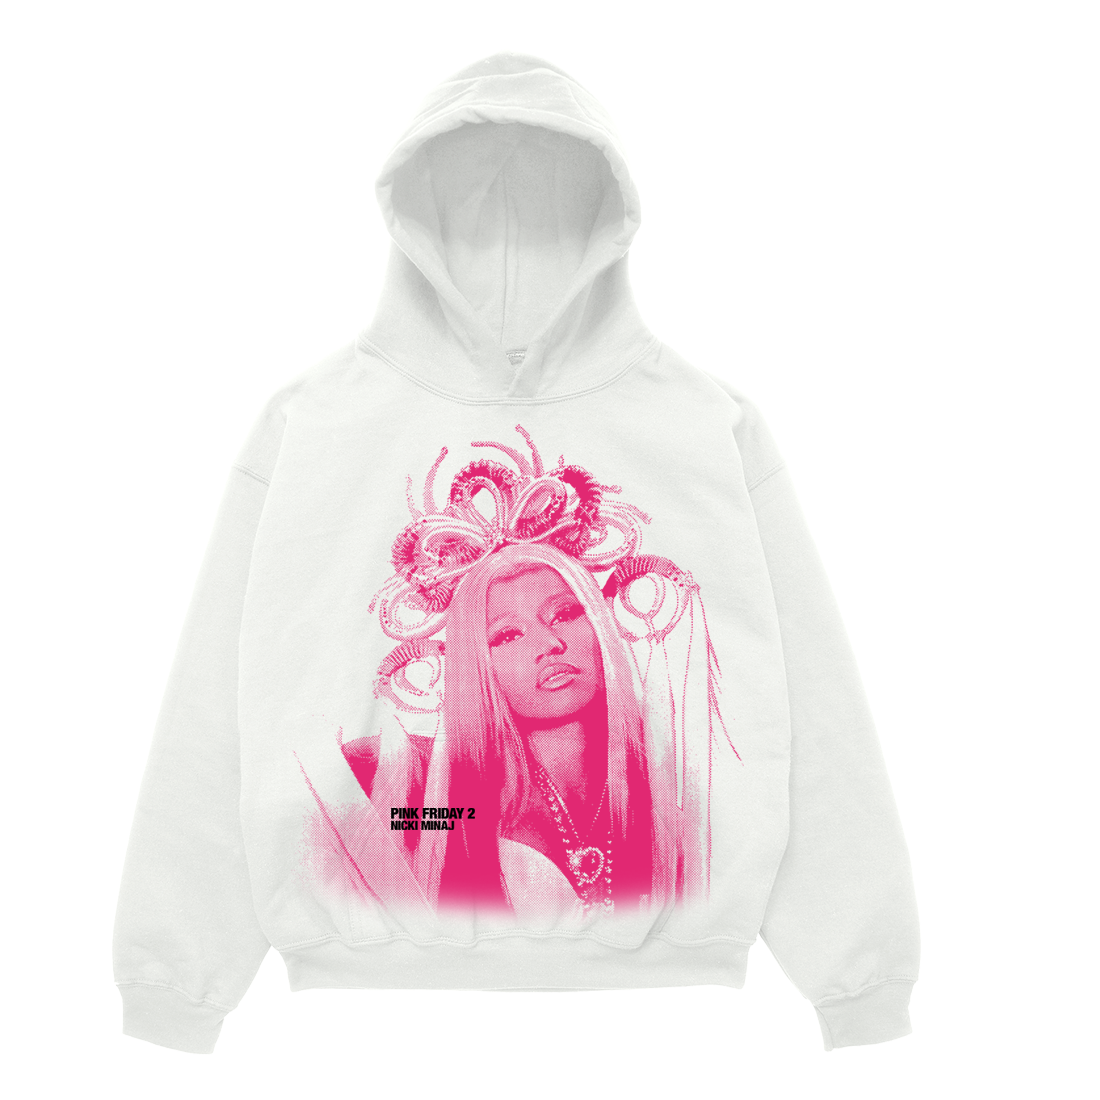 Nicki Minaj - Official Store - Shop Exclusive Music & Merch